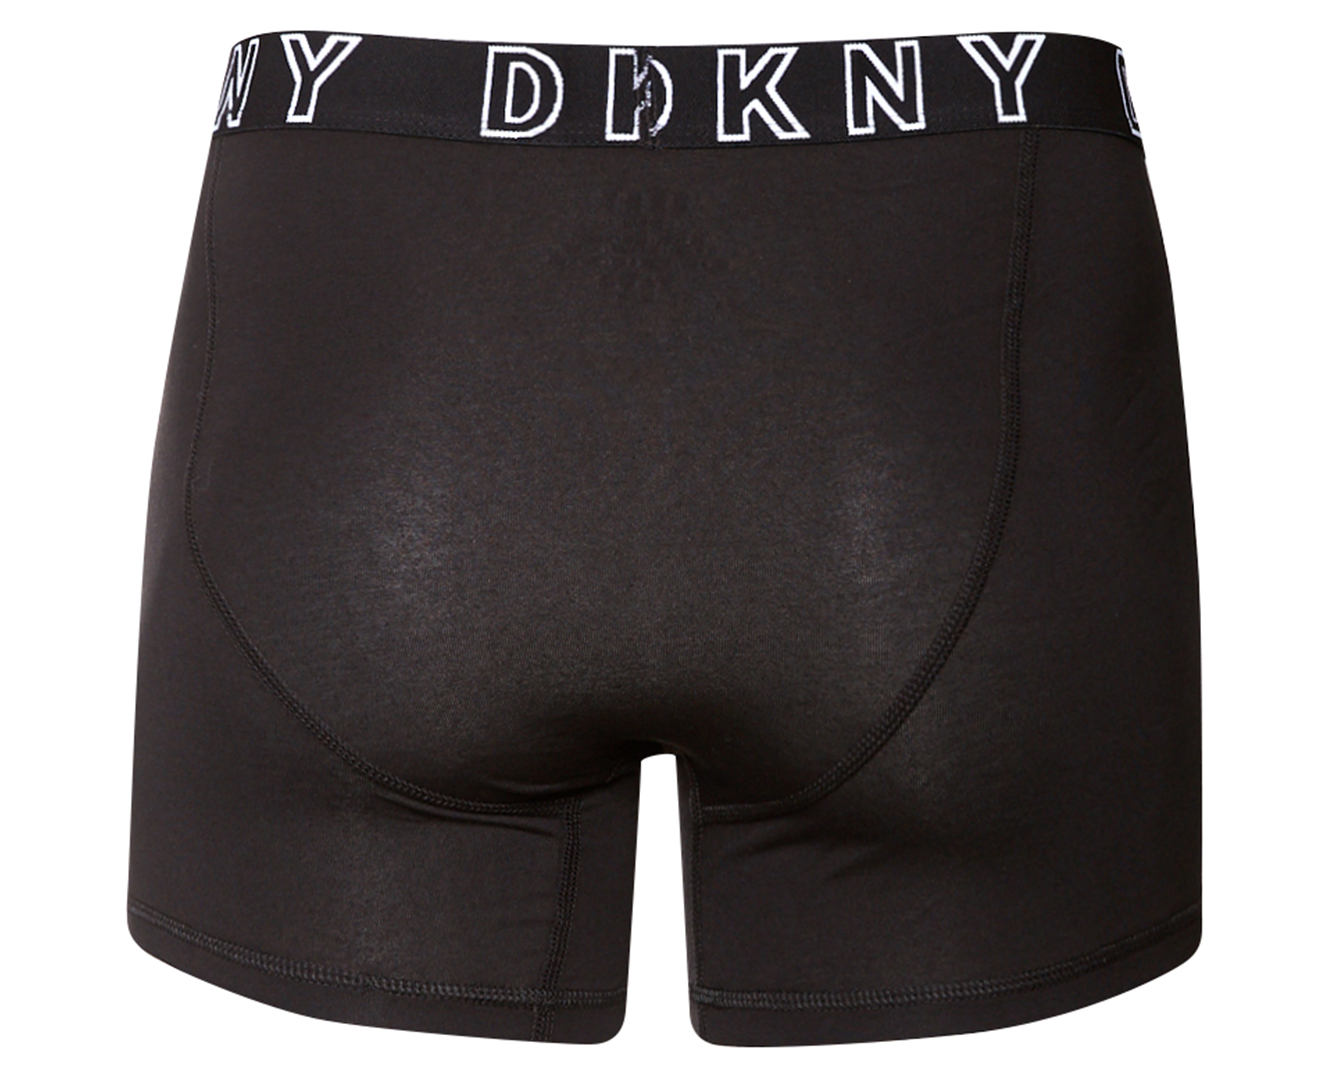 DKNY Men's Stretch Sport Boxer Brief 3-Pack - Black